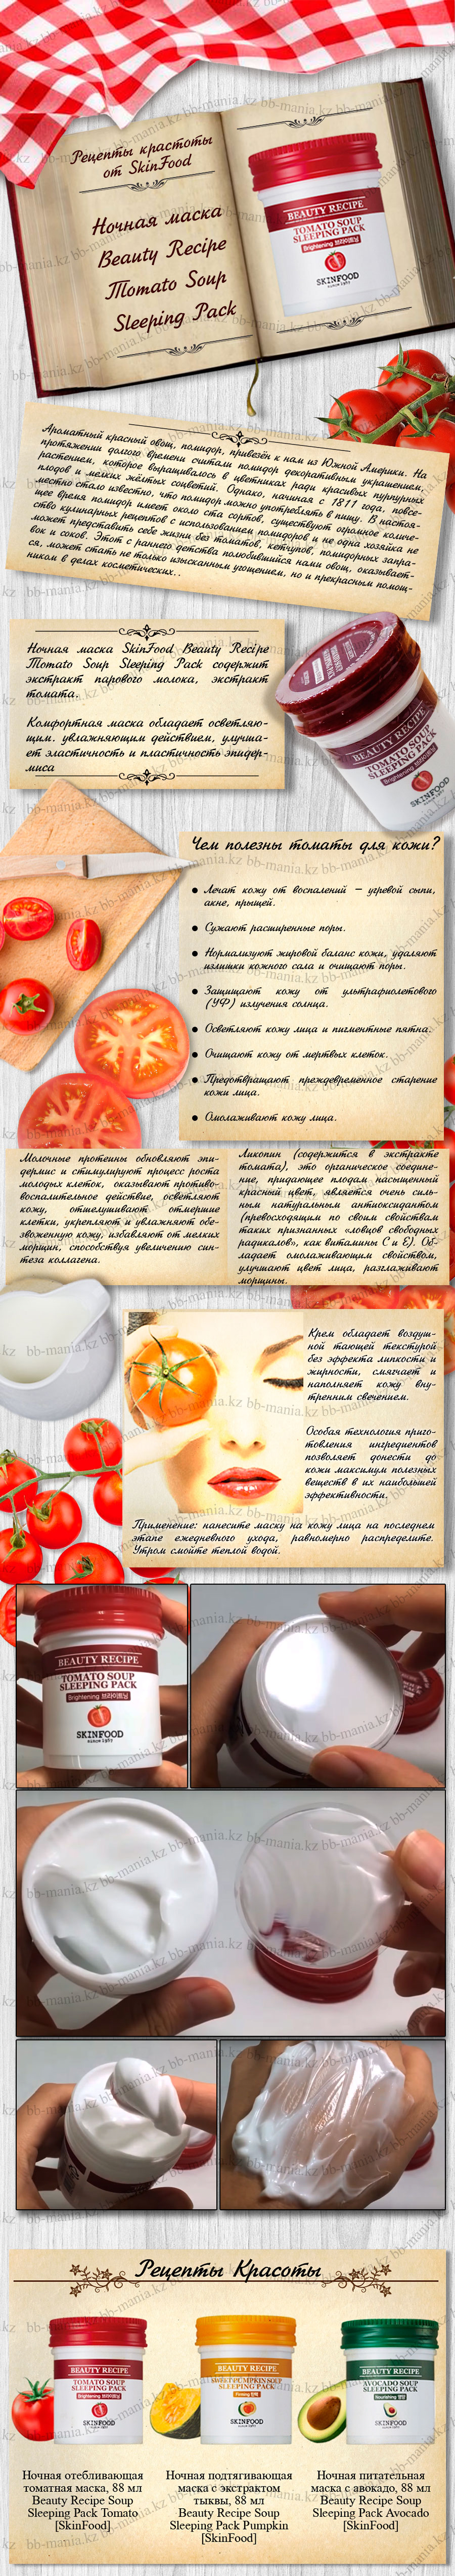 Beauty-Recipe-Soup-Sleeping-Pack-Tomato-[SkinFood]-min